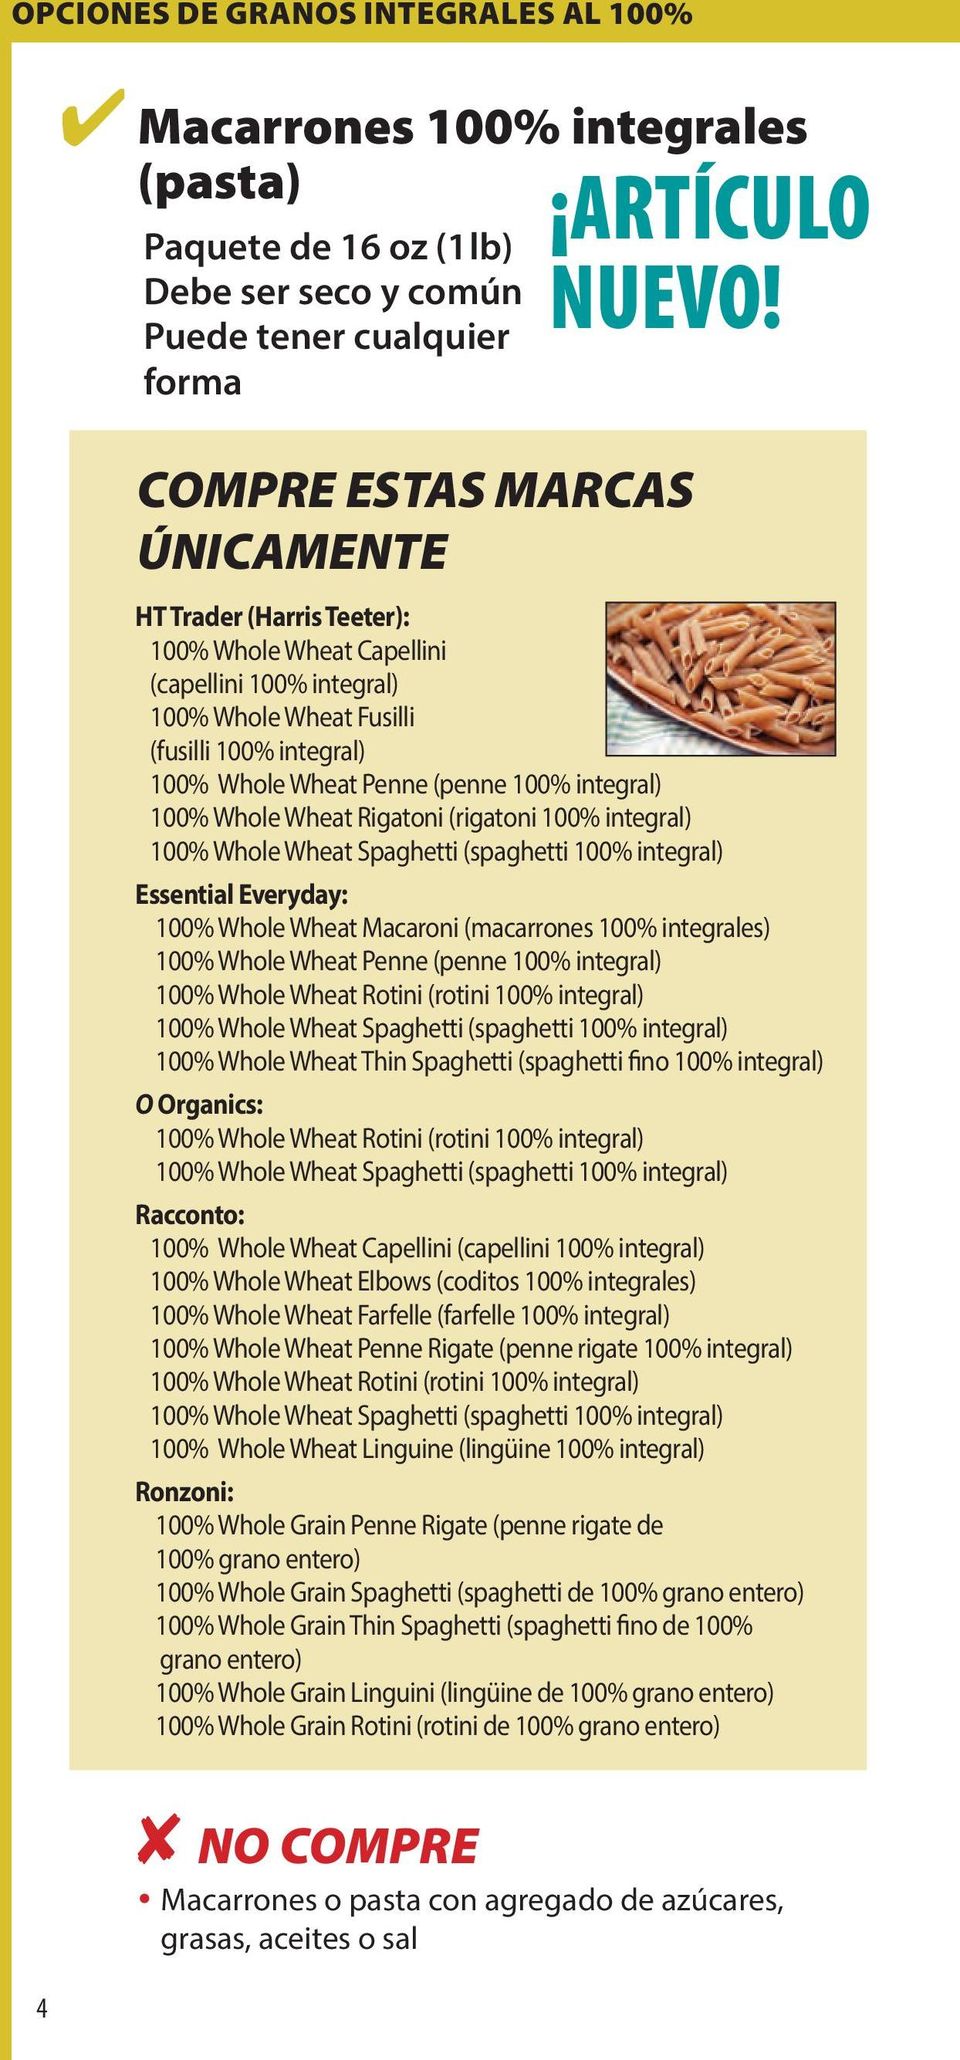 (rigatoni 100% integral) 100% Whole Wheat Spaghetti (spaghetti 100% integral) Essential Everyday: 100% Whole Wheat Macaroni (macarrones 100% integrales) 100% Whole Wheat Penne (penne 100% integral)